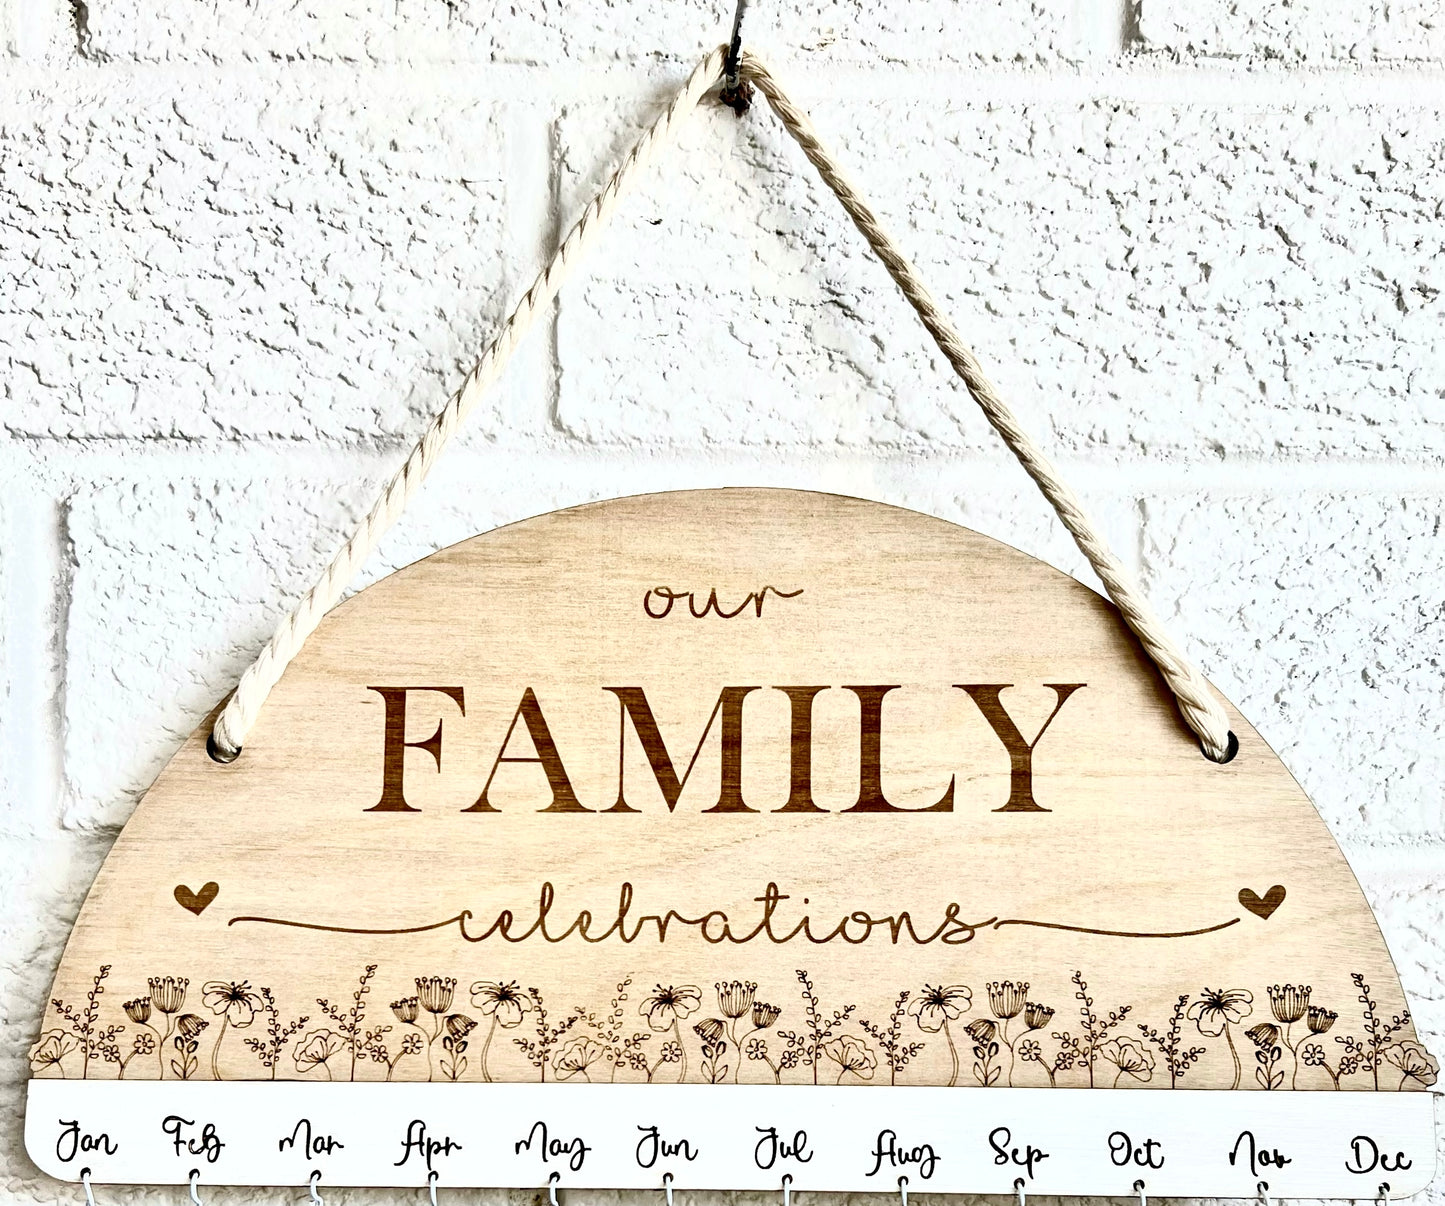 Wooden Floral "Our Family Celebrations" Calendar - Design Hut